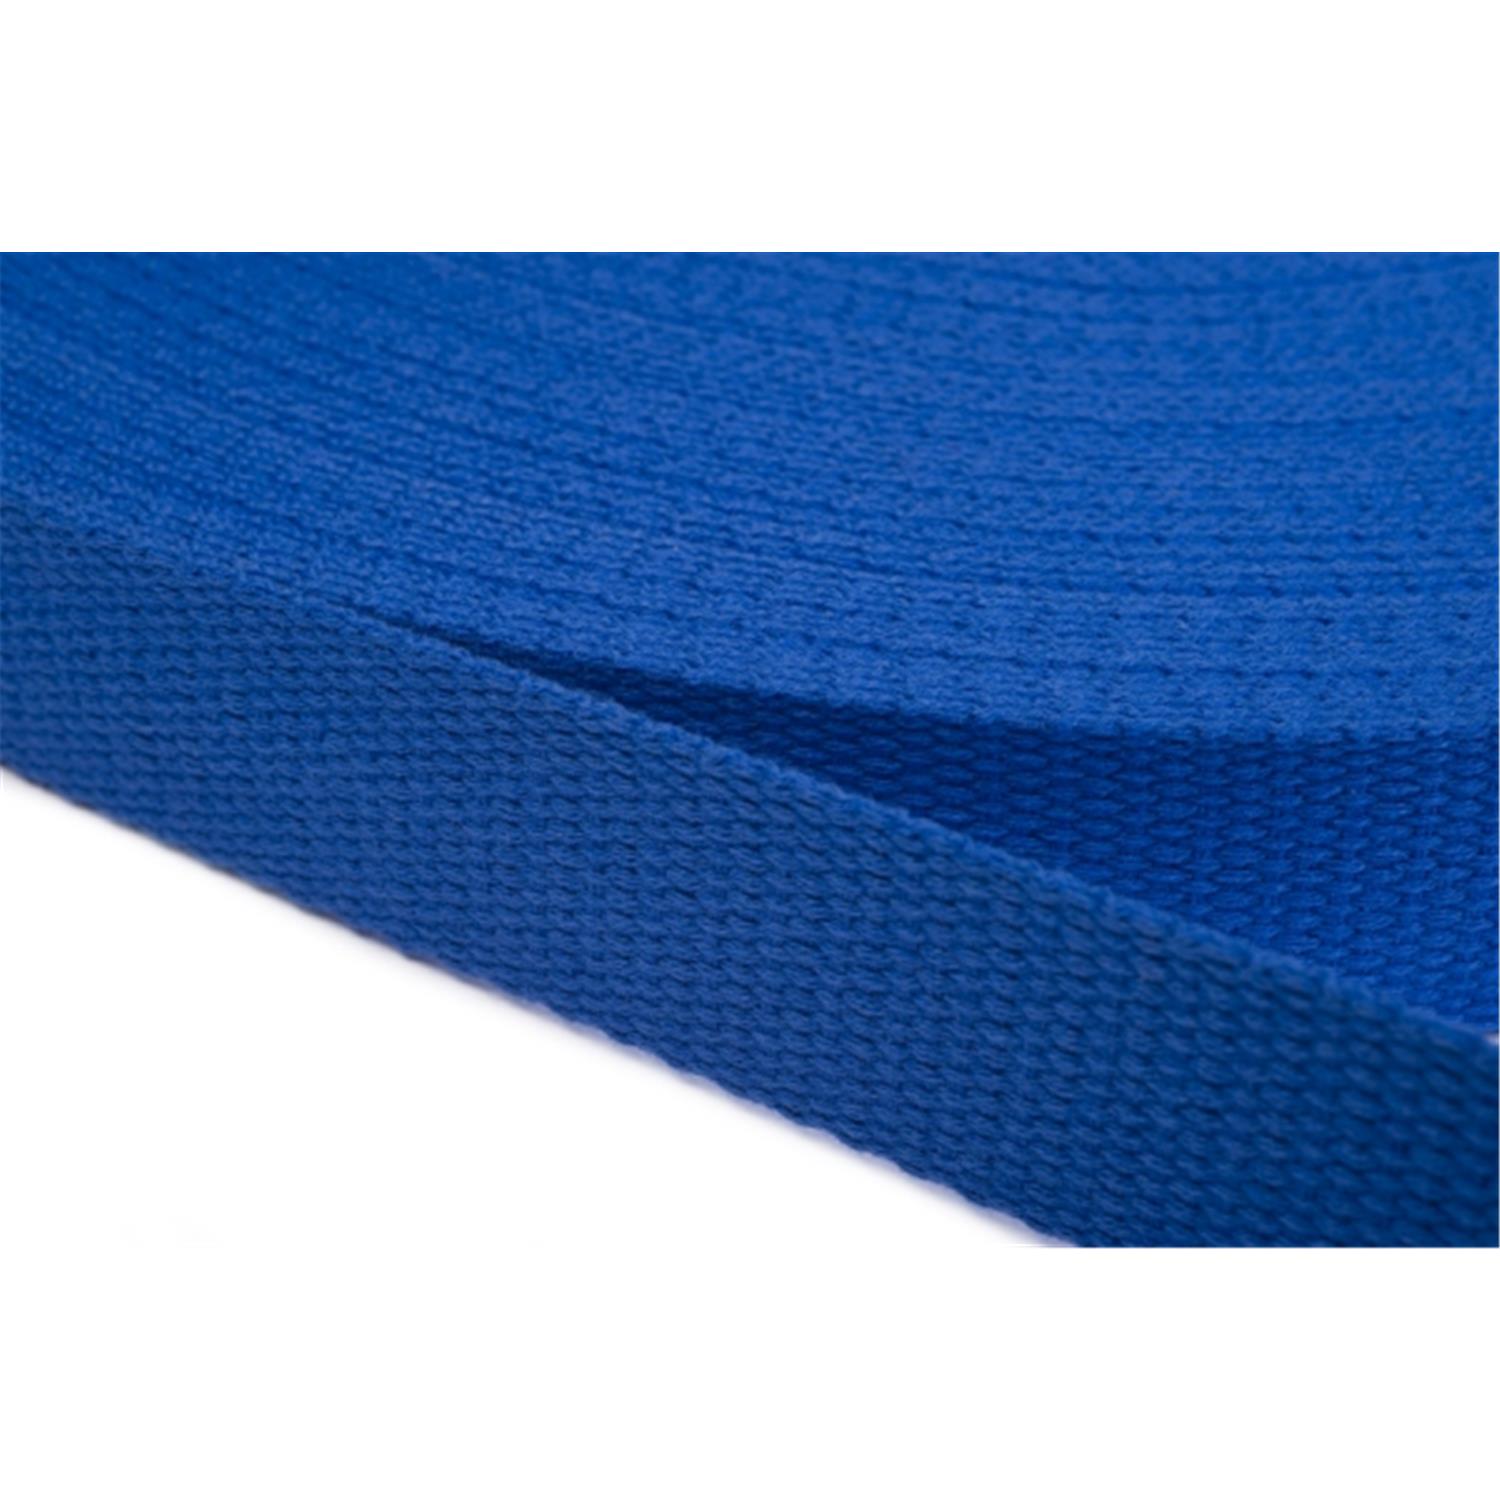 Gurtband aus Baumwolle 25mm in 20 Farben 12 - royalblau 6 Meter